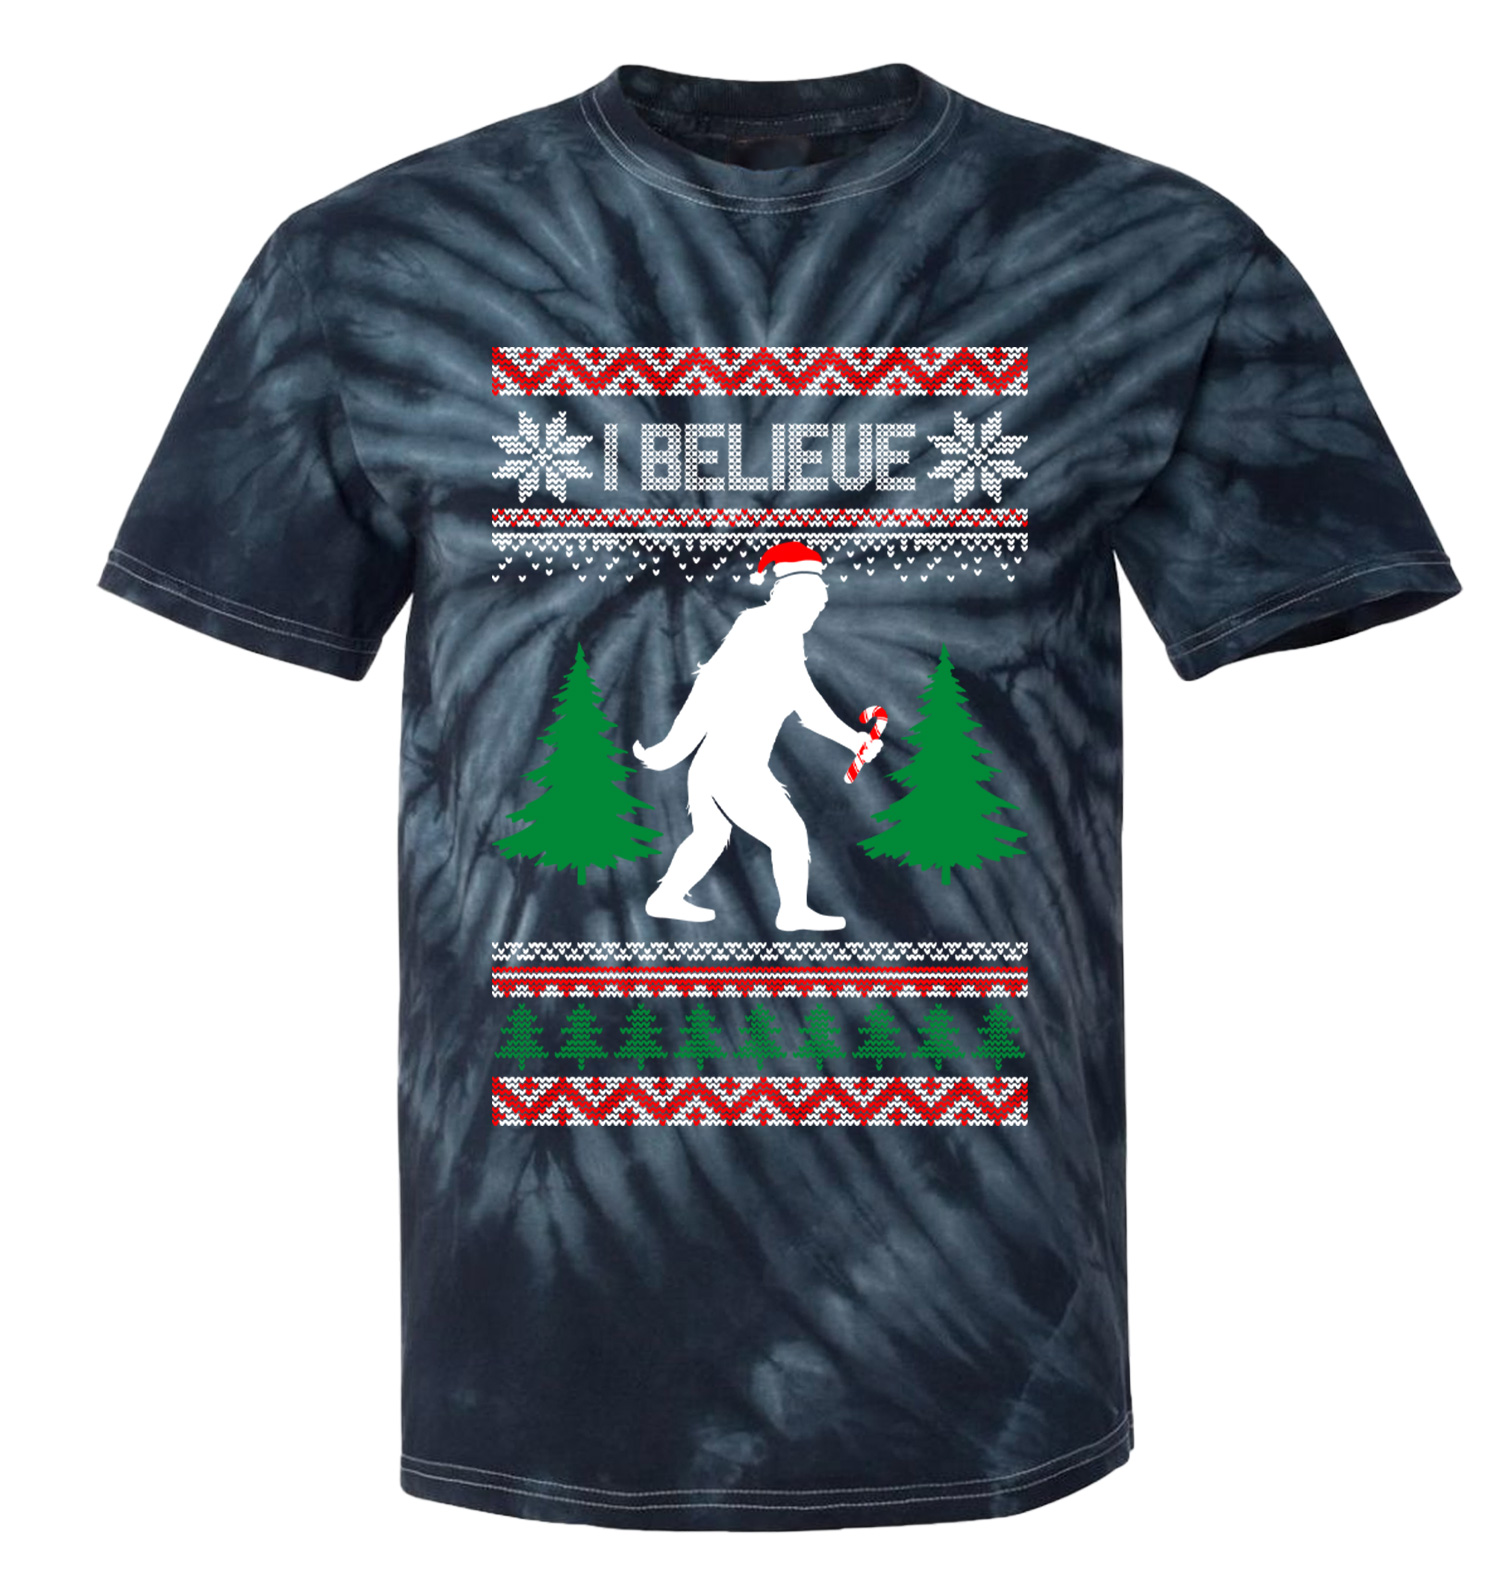 YETI CHRISTMAS, Men's T-Shirt Regular